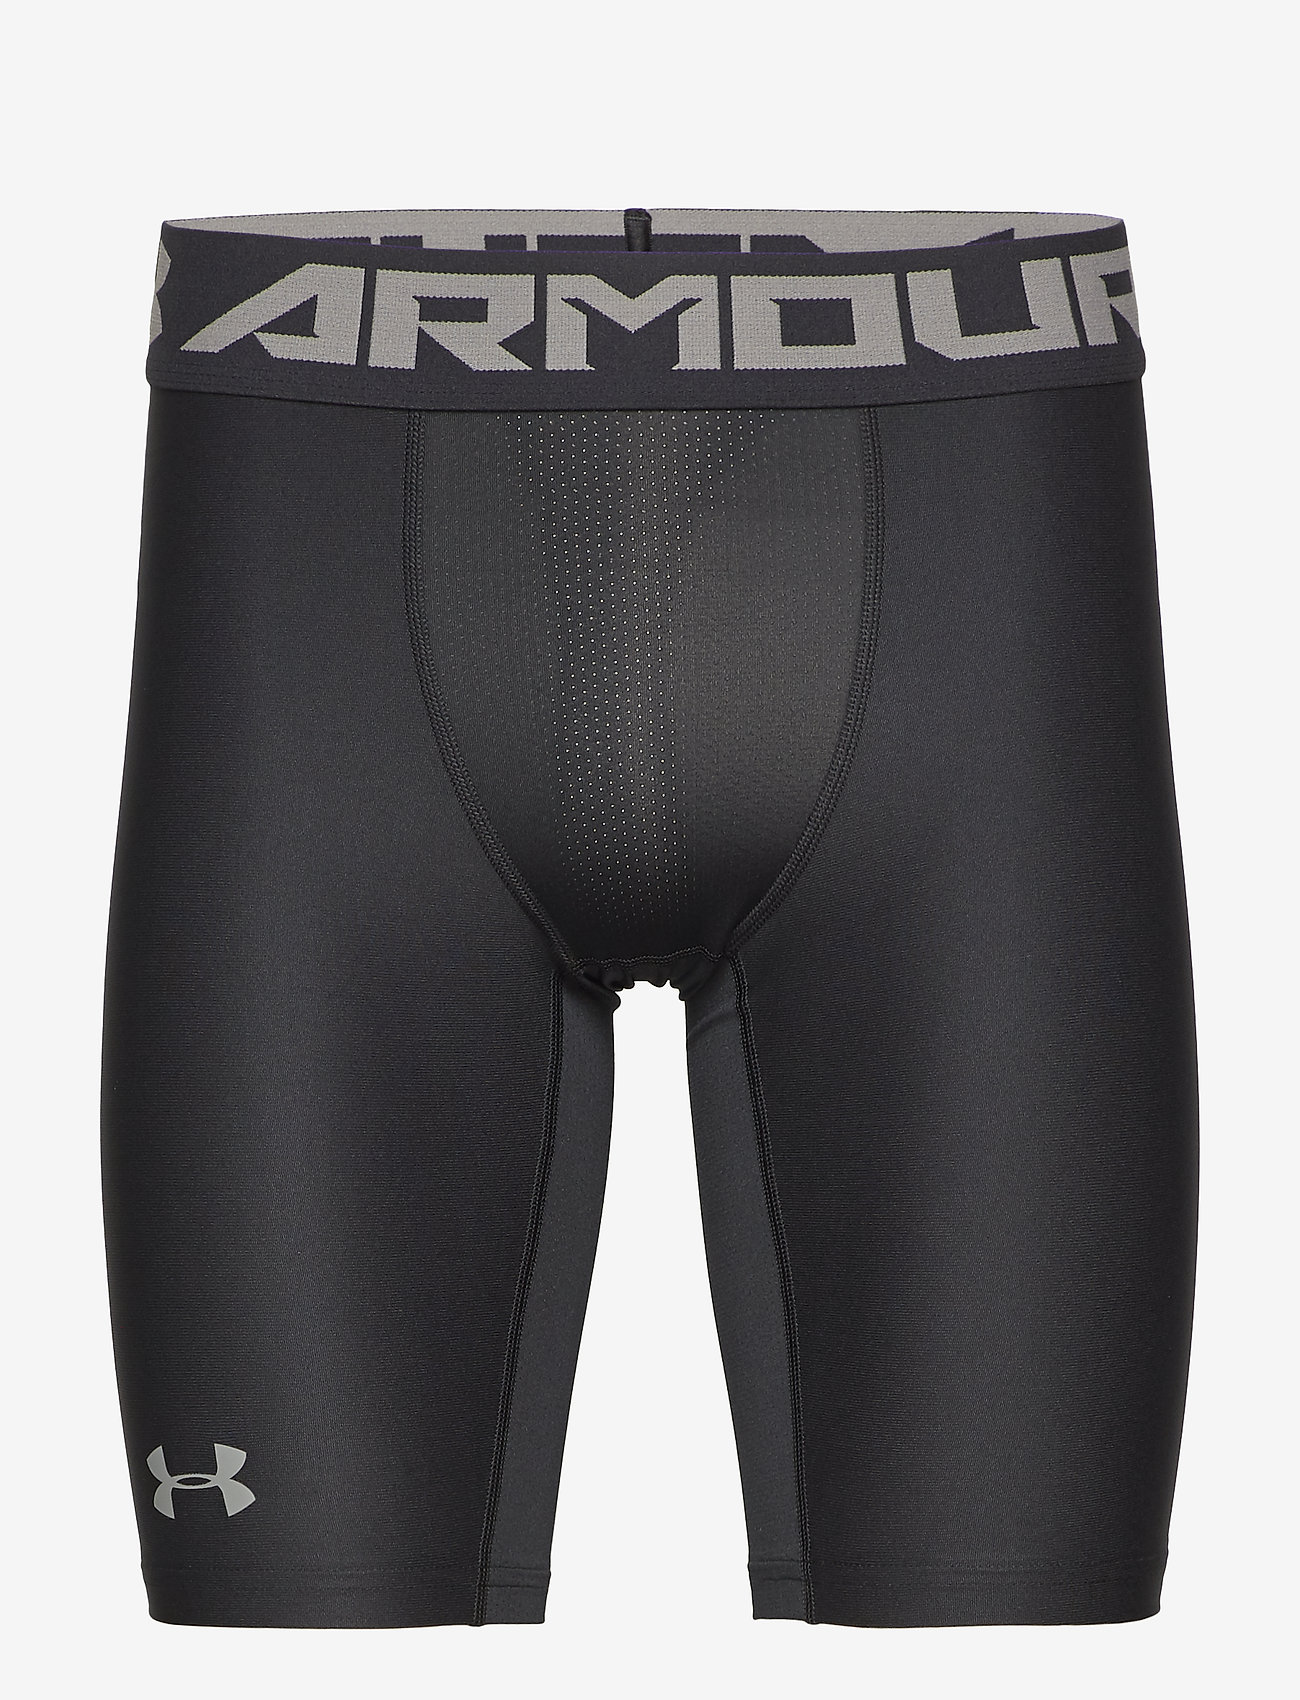 Hg Armour 2.0 Long Short (Black) (25.50 